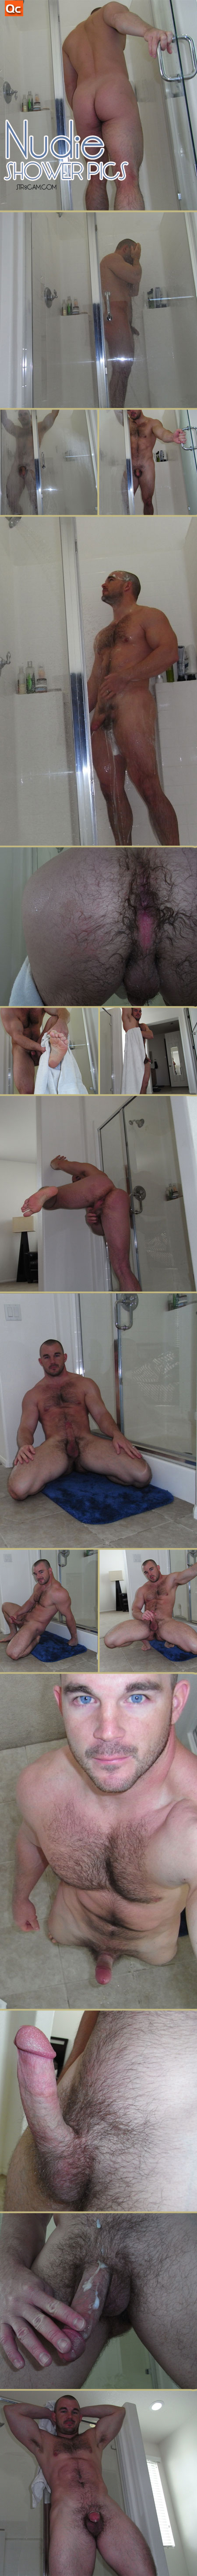 str8cam nudie shower